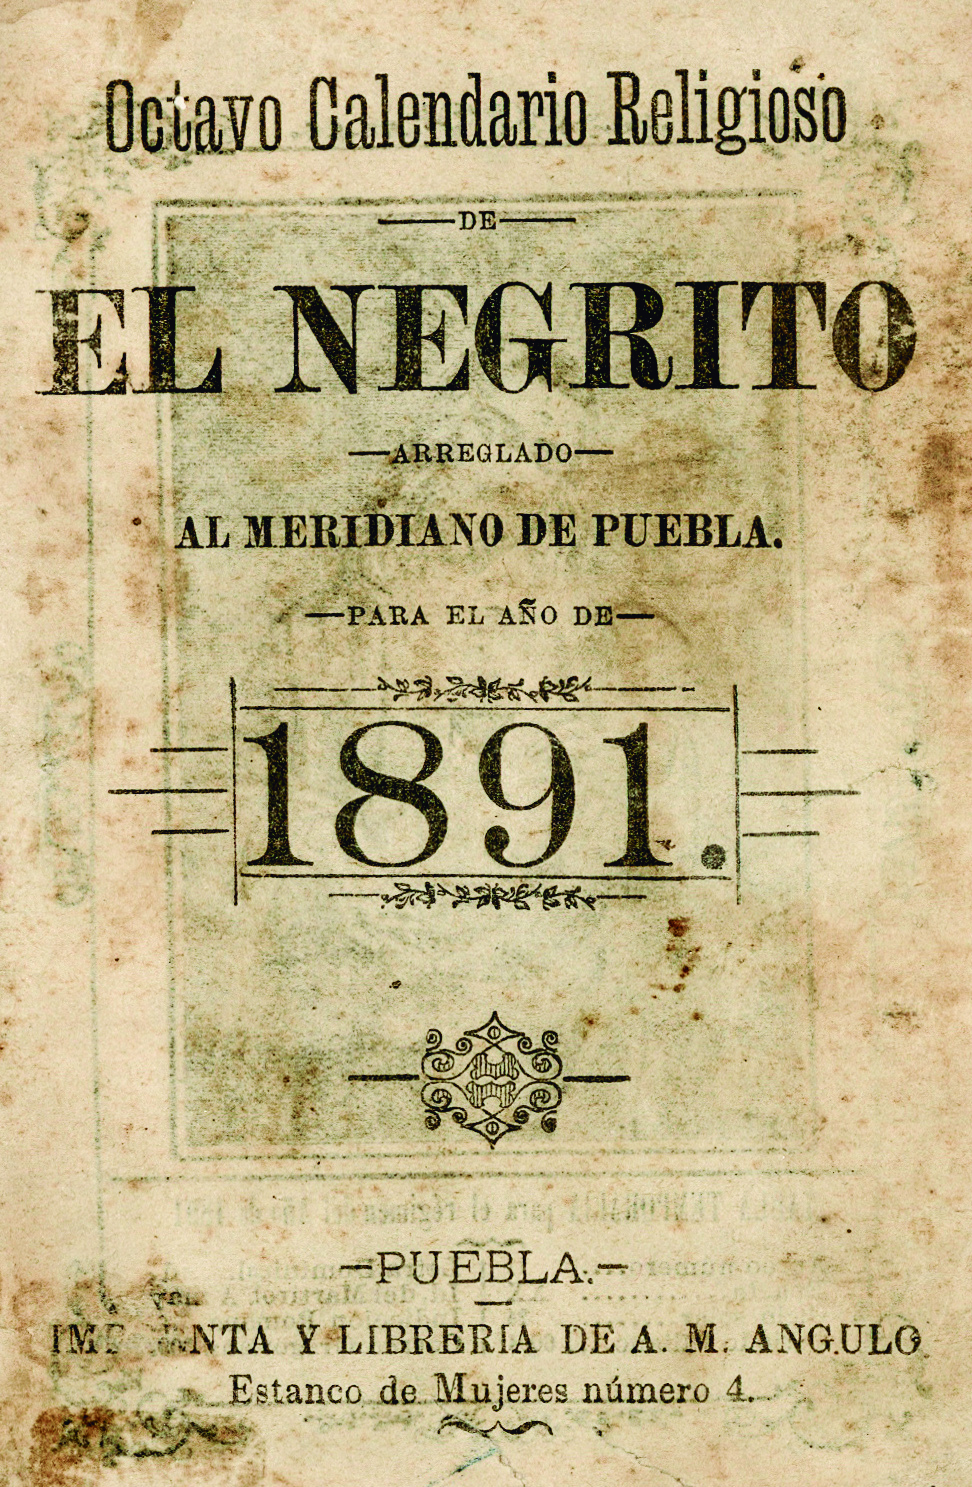 1.3 Angulo_Negrito_1891_portada.jpg